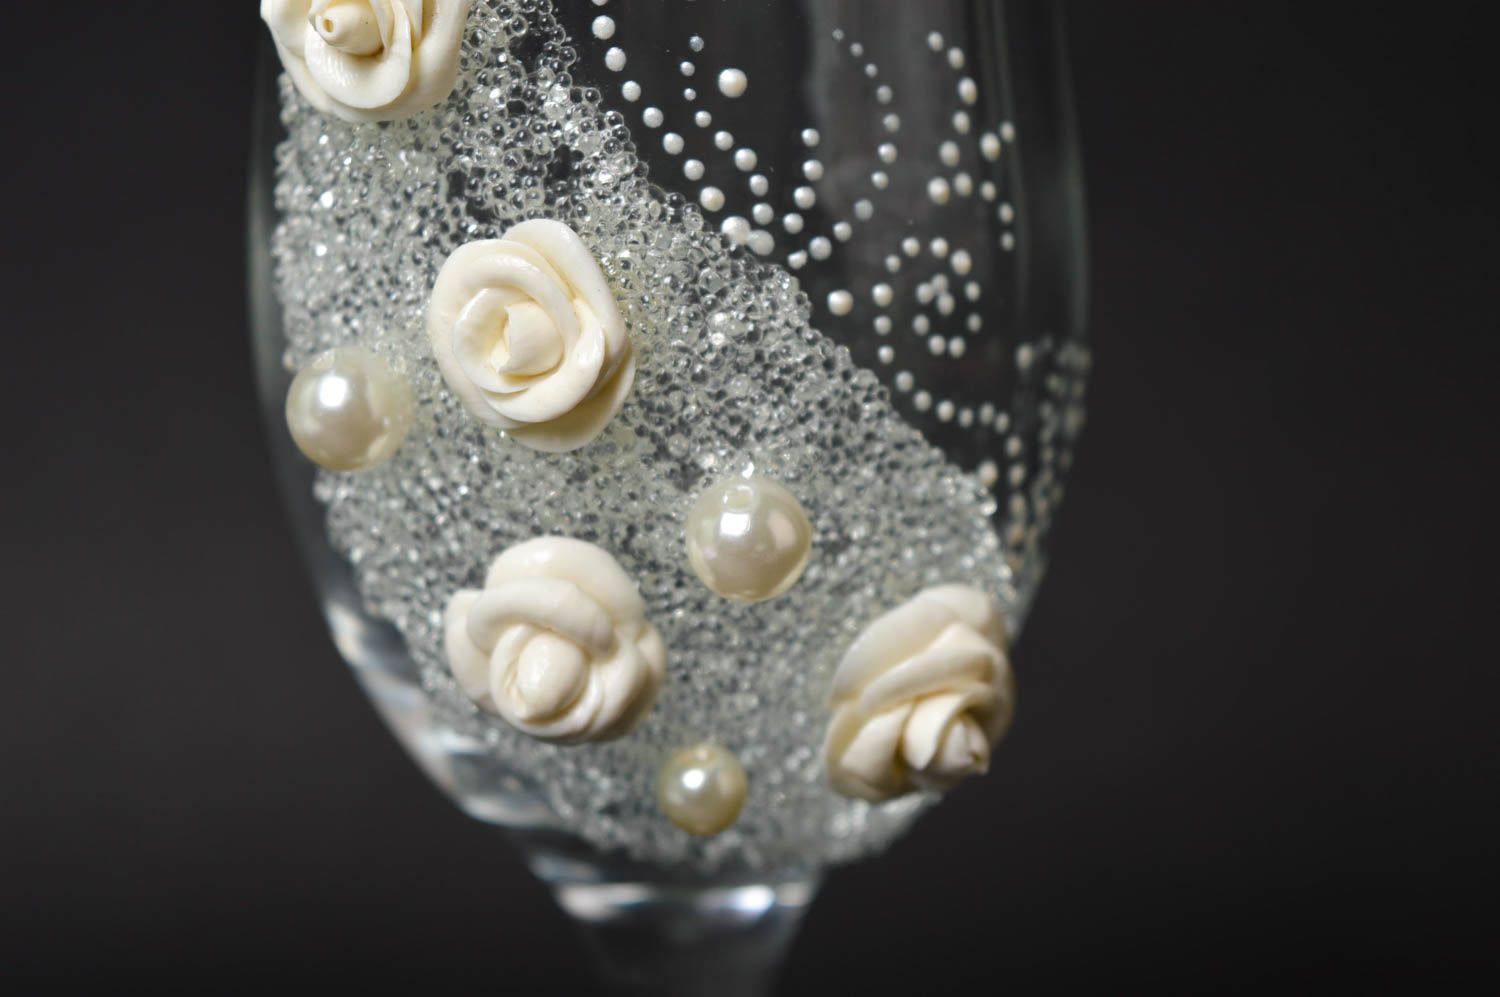 Handmade wedding glasses ideas wedding champagne glasses for bride and groom photo 3